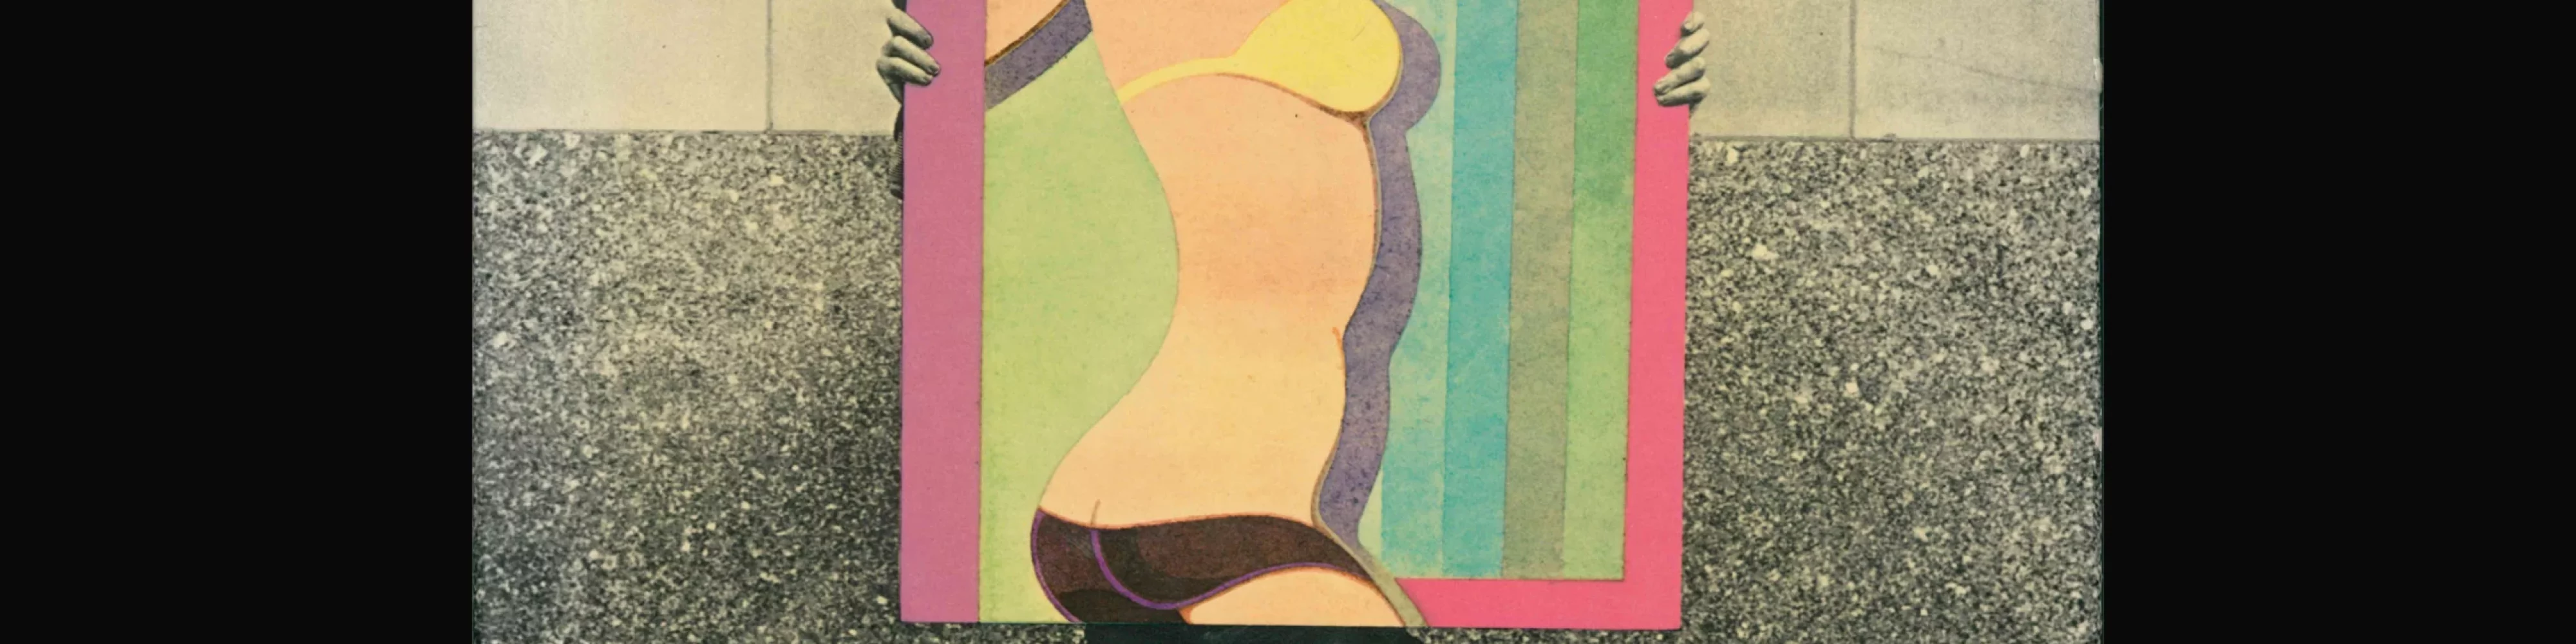 Graphis Posters 74 (The International Annual of Poster Art), Walter Herdeg, 1974